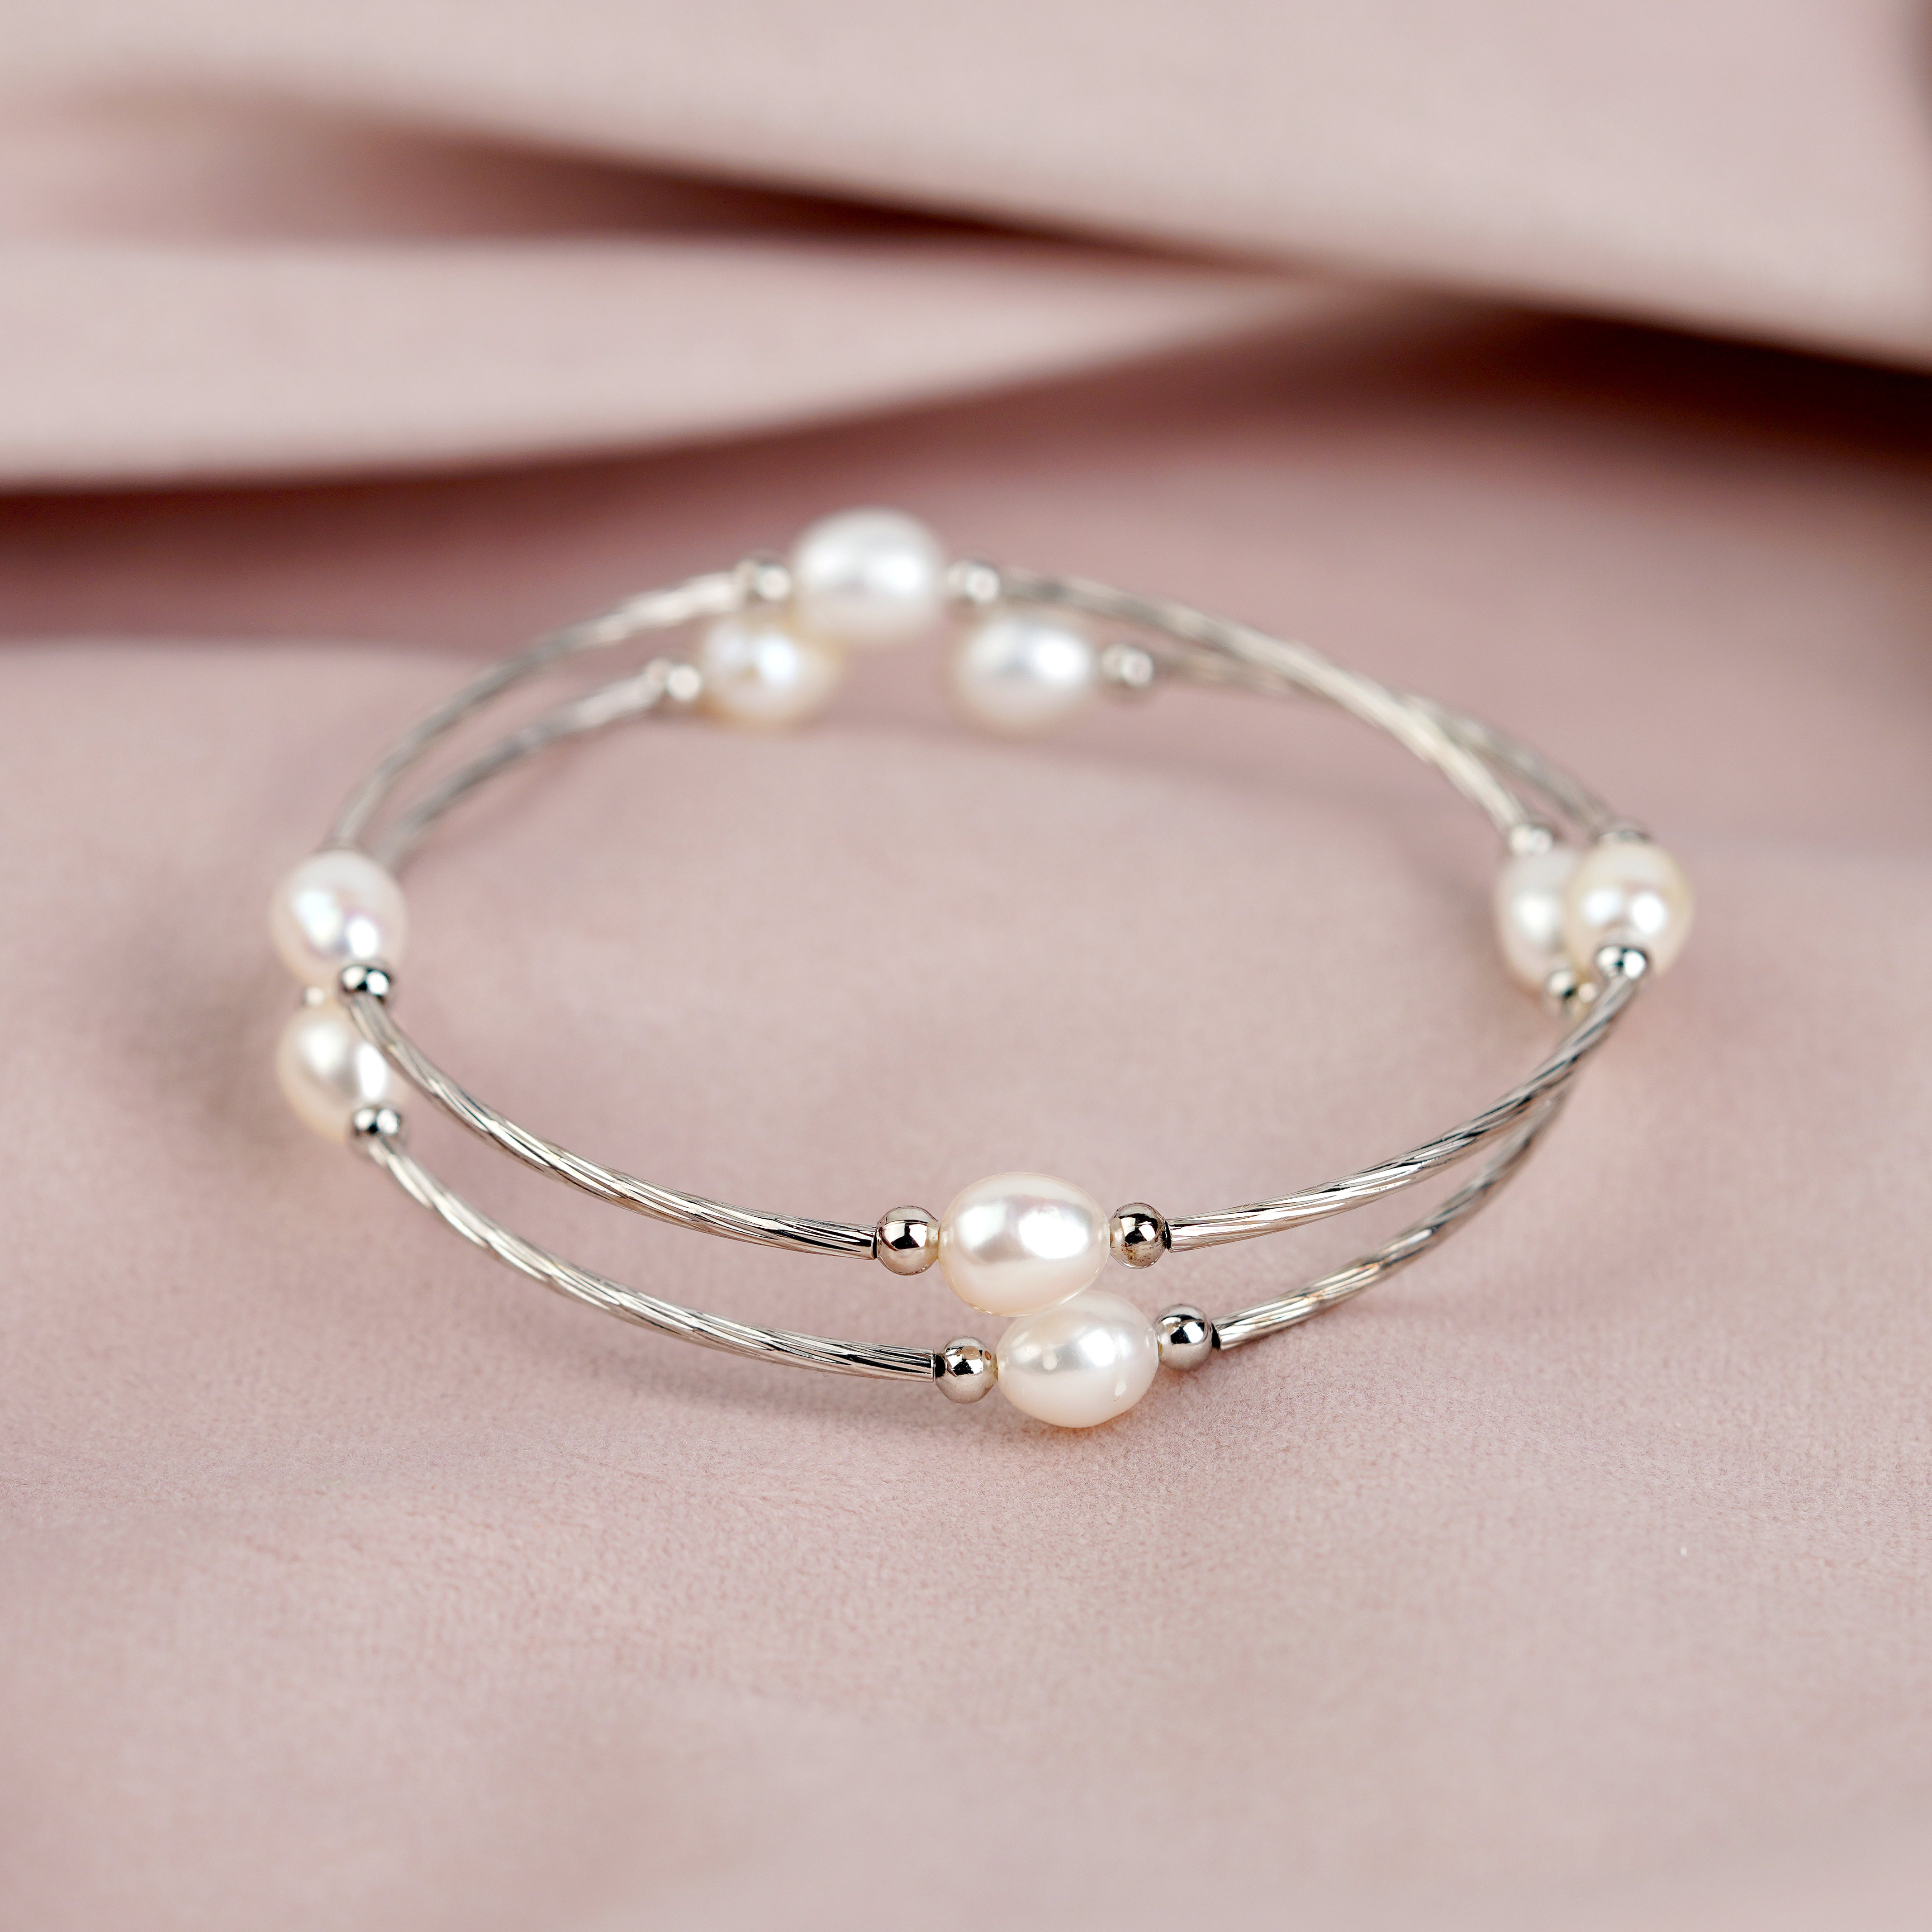 Freshwater White Pearl bracelet in Silver